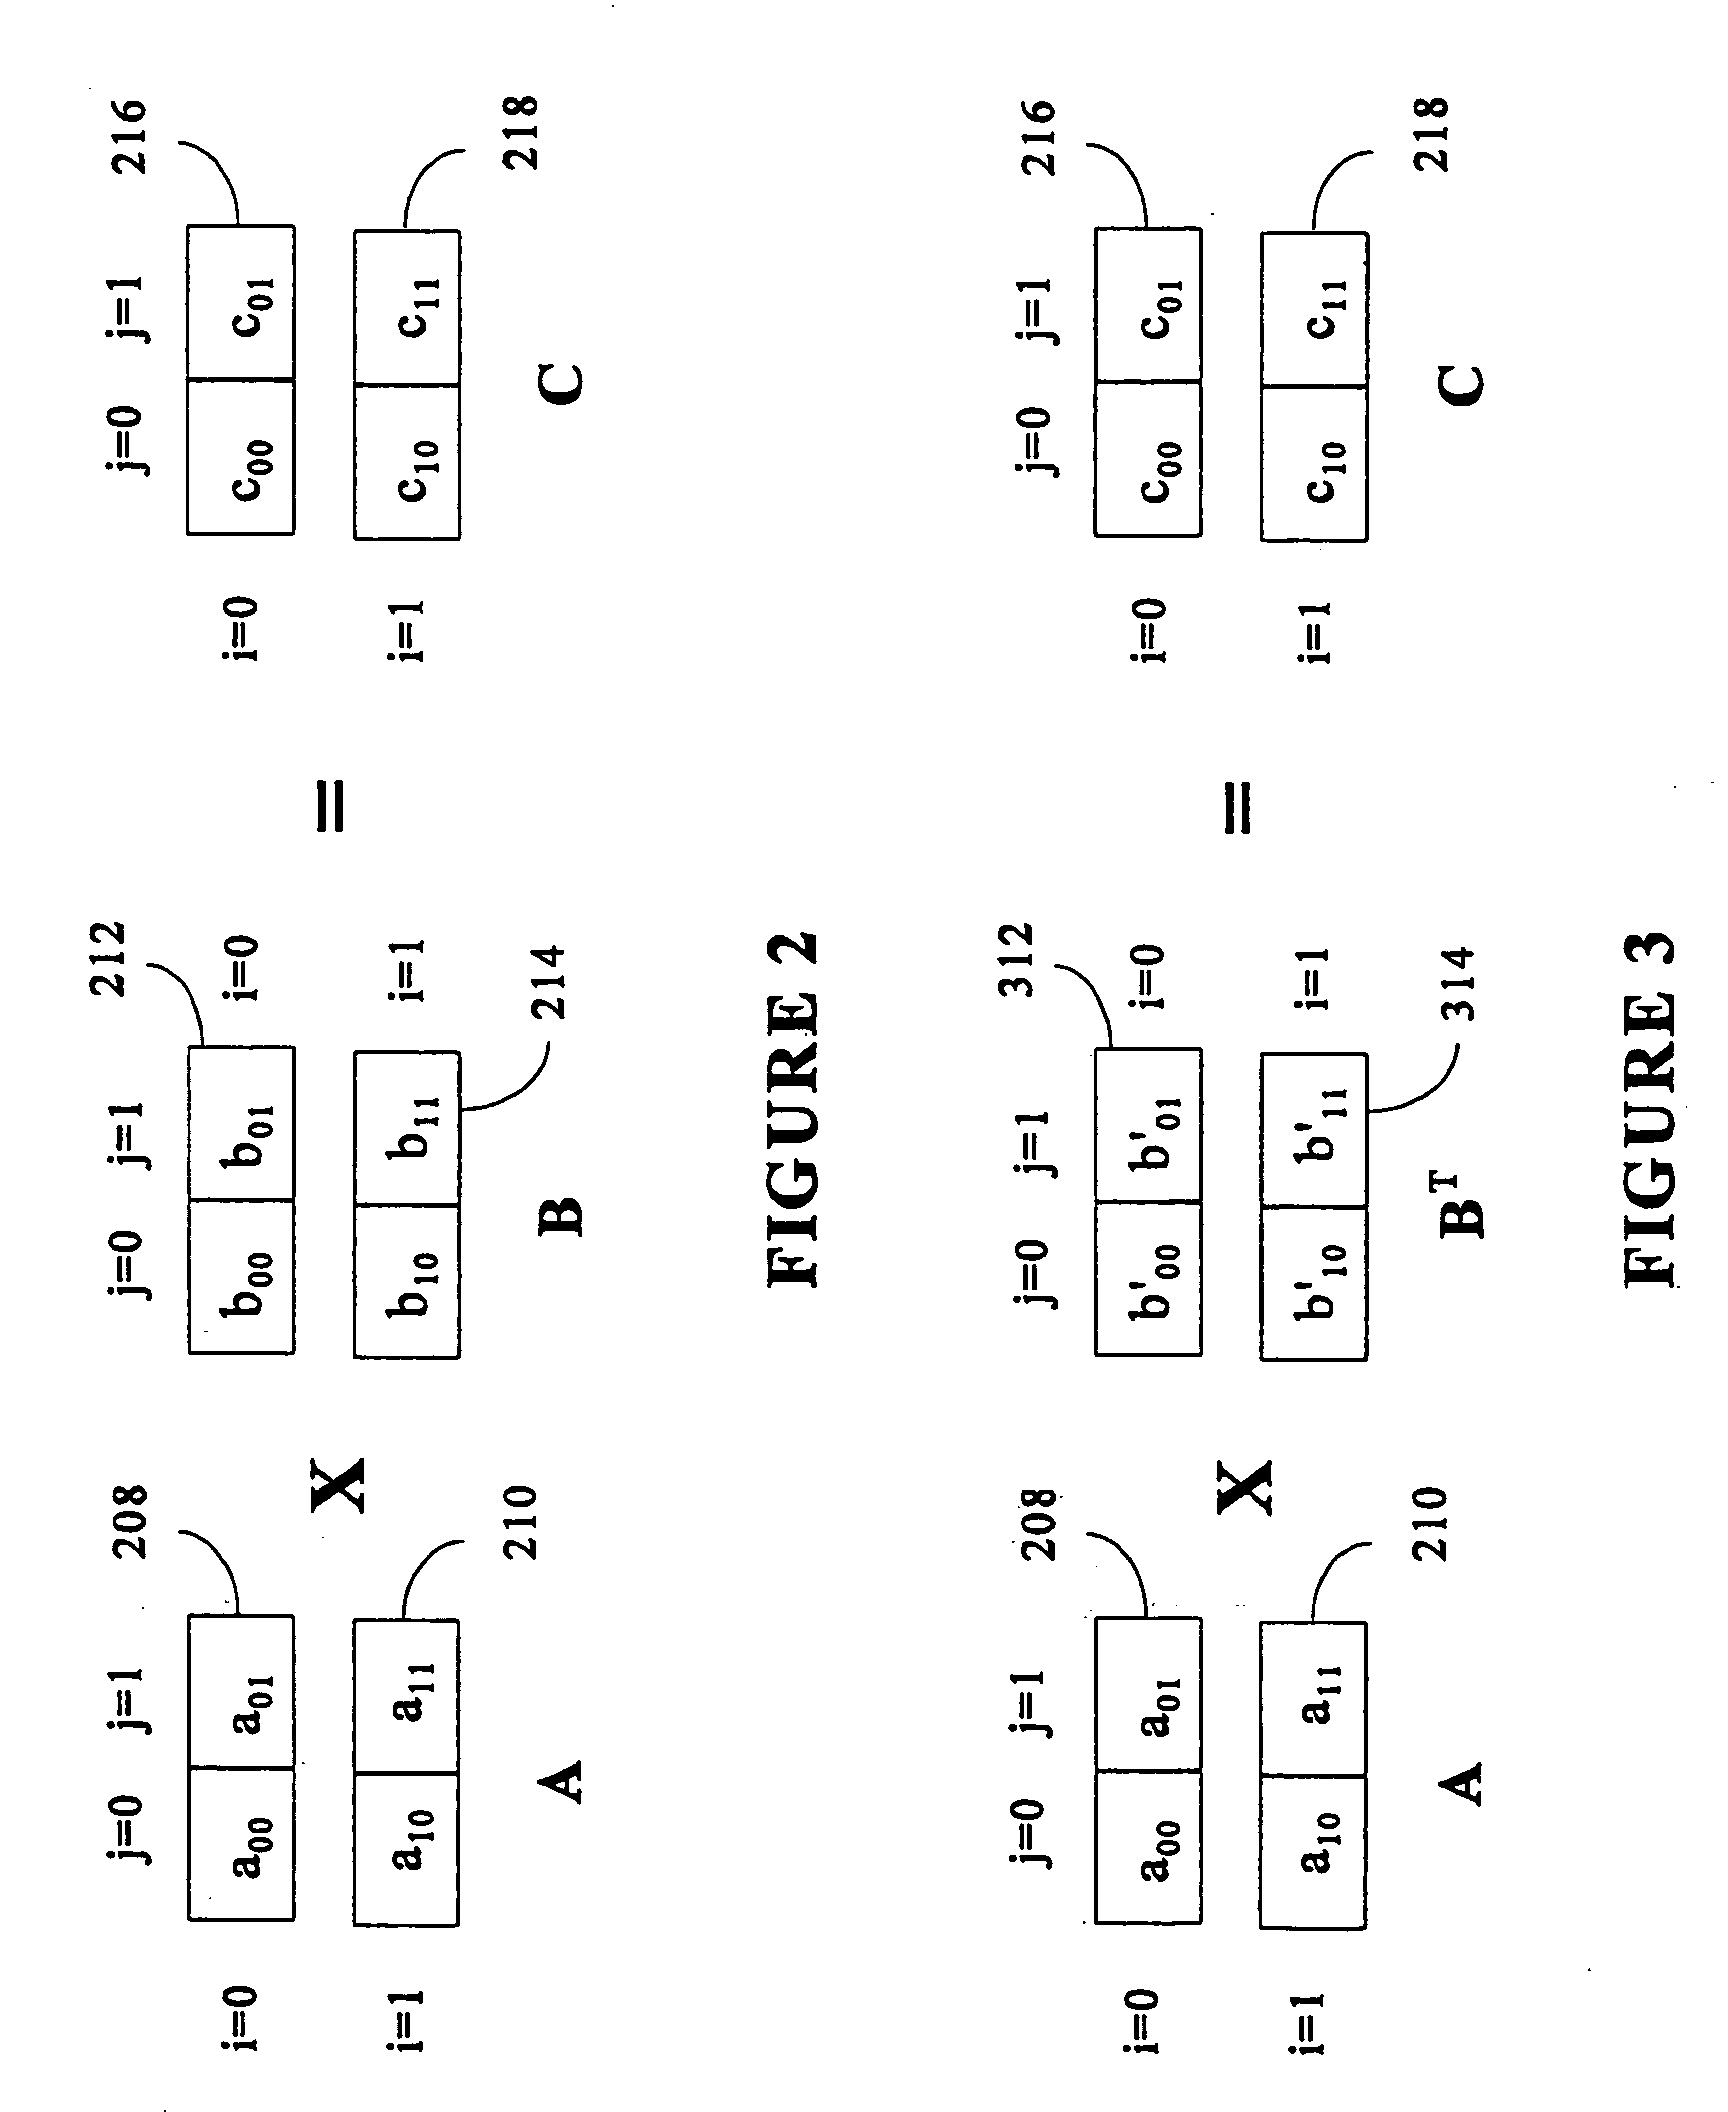 Matrix multiplication in a vector processing system